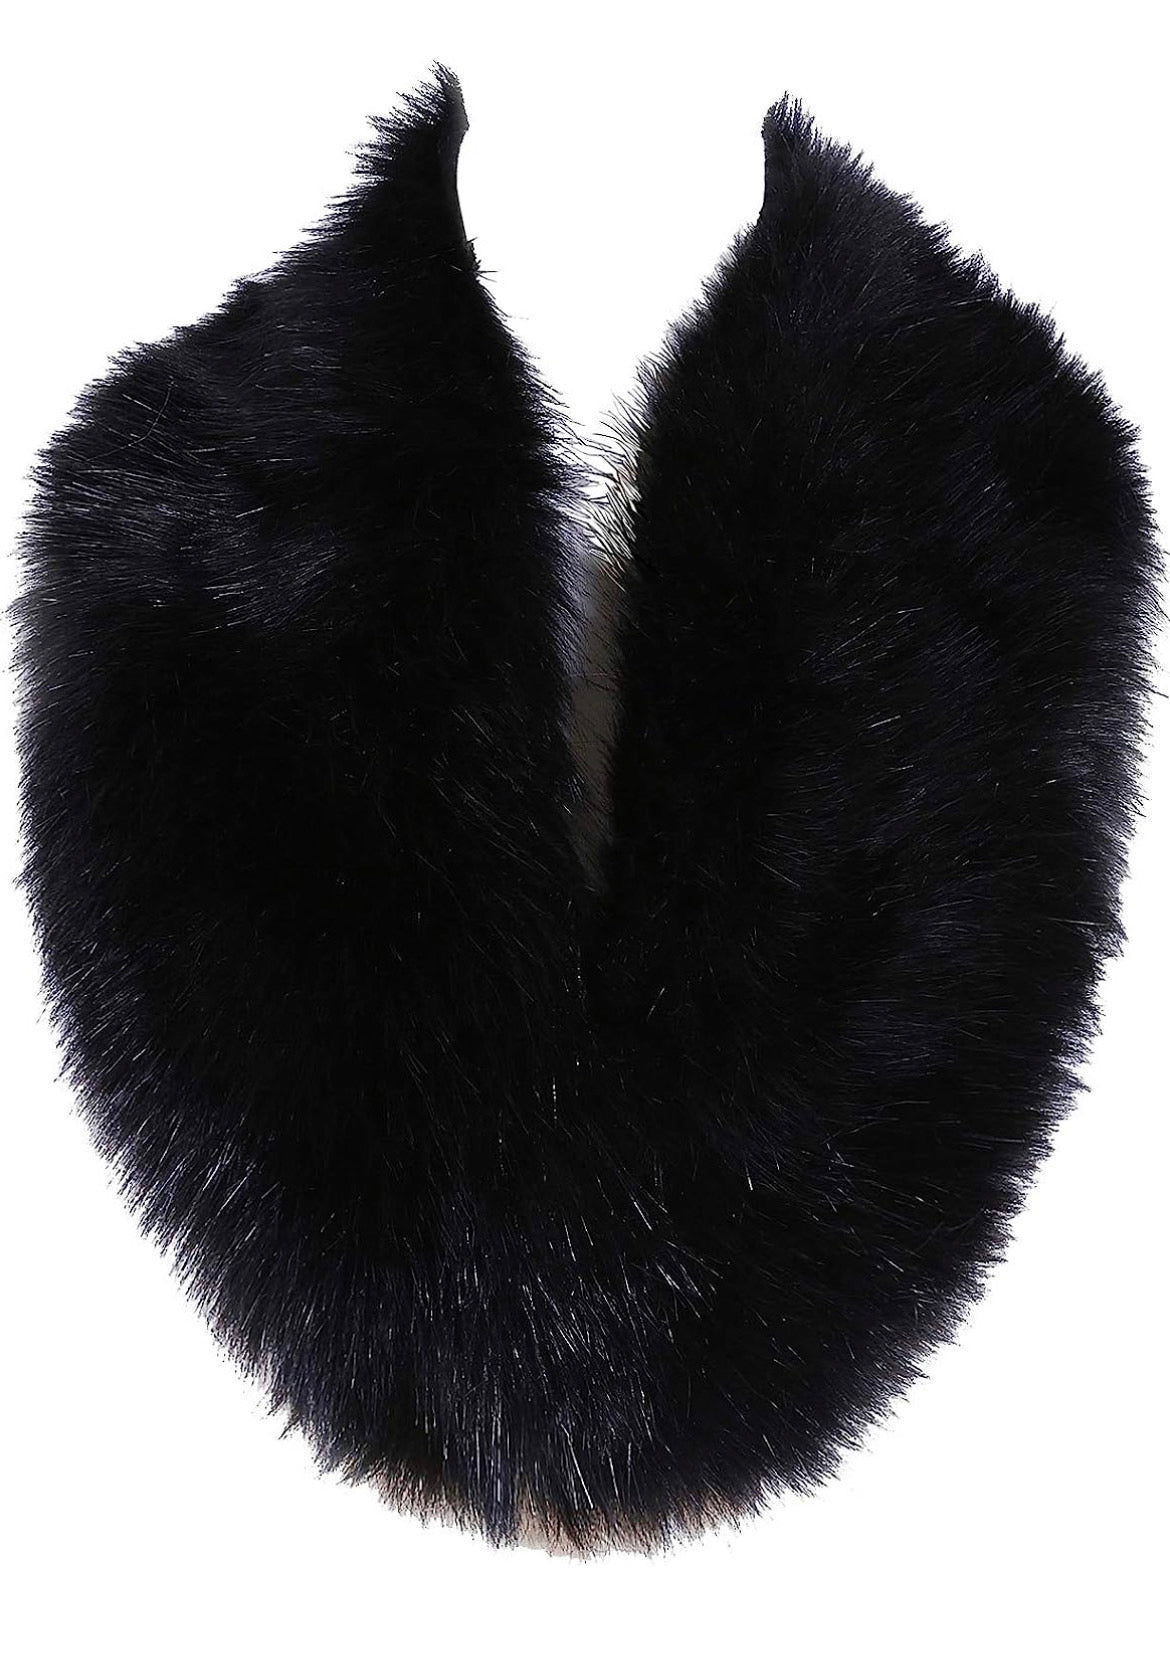 Black faux fur shawl